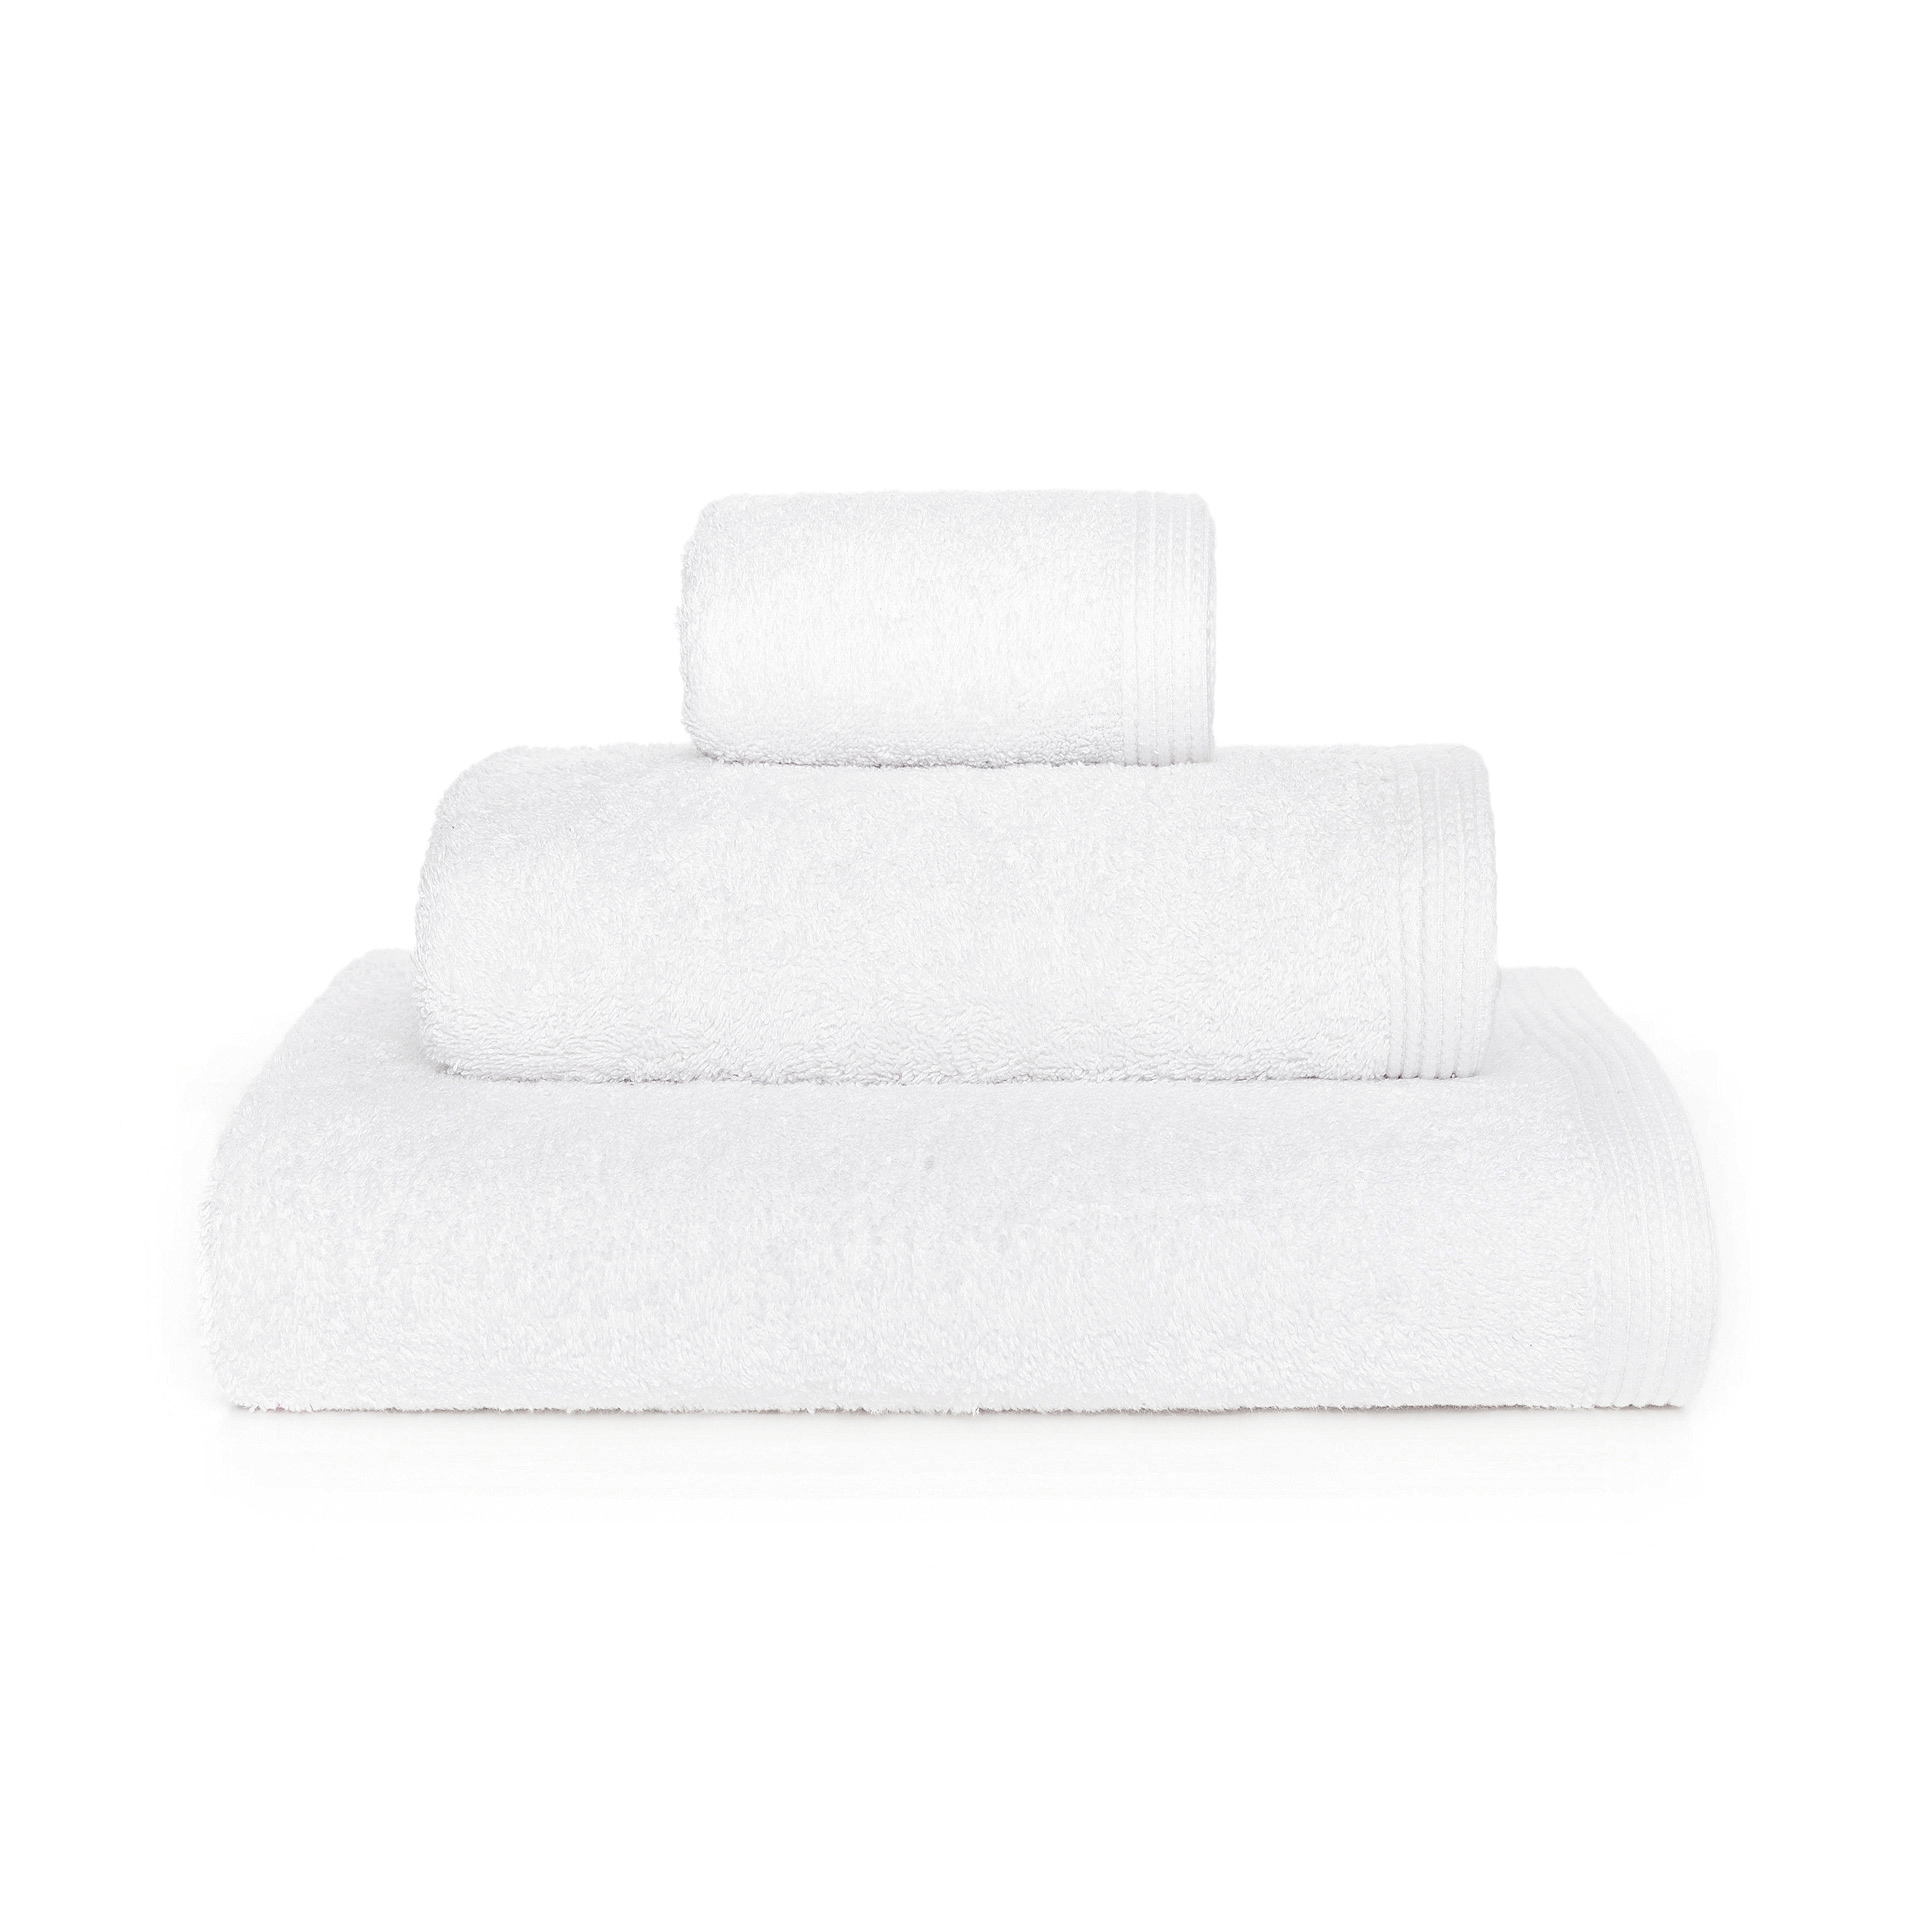 AD hotelska oprema Premium hotelski ručnik za tijelo 70x140 (2 komada) slika proizvoda